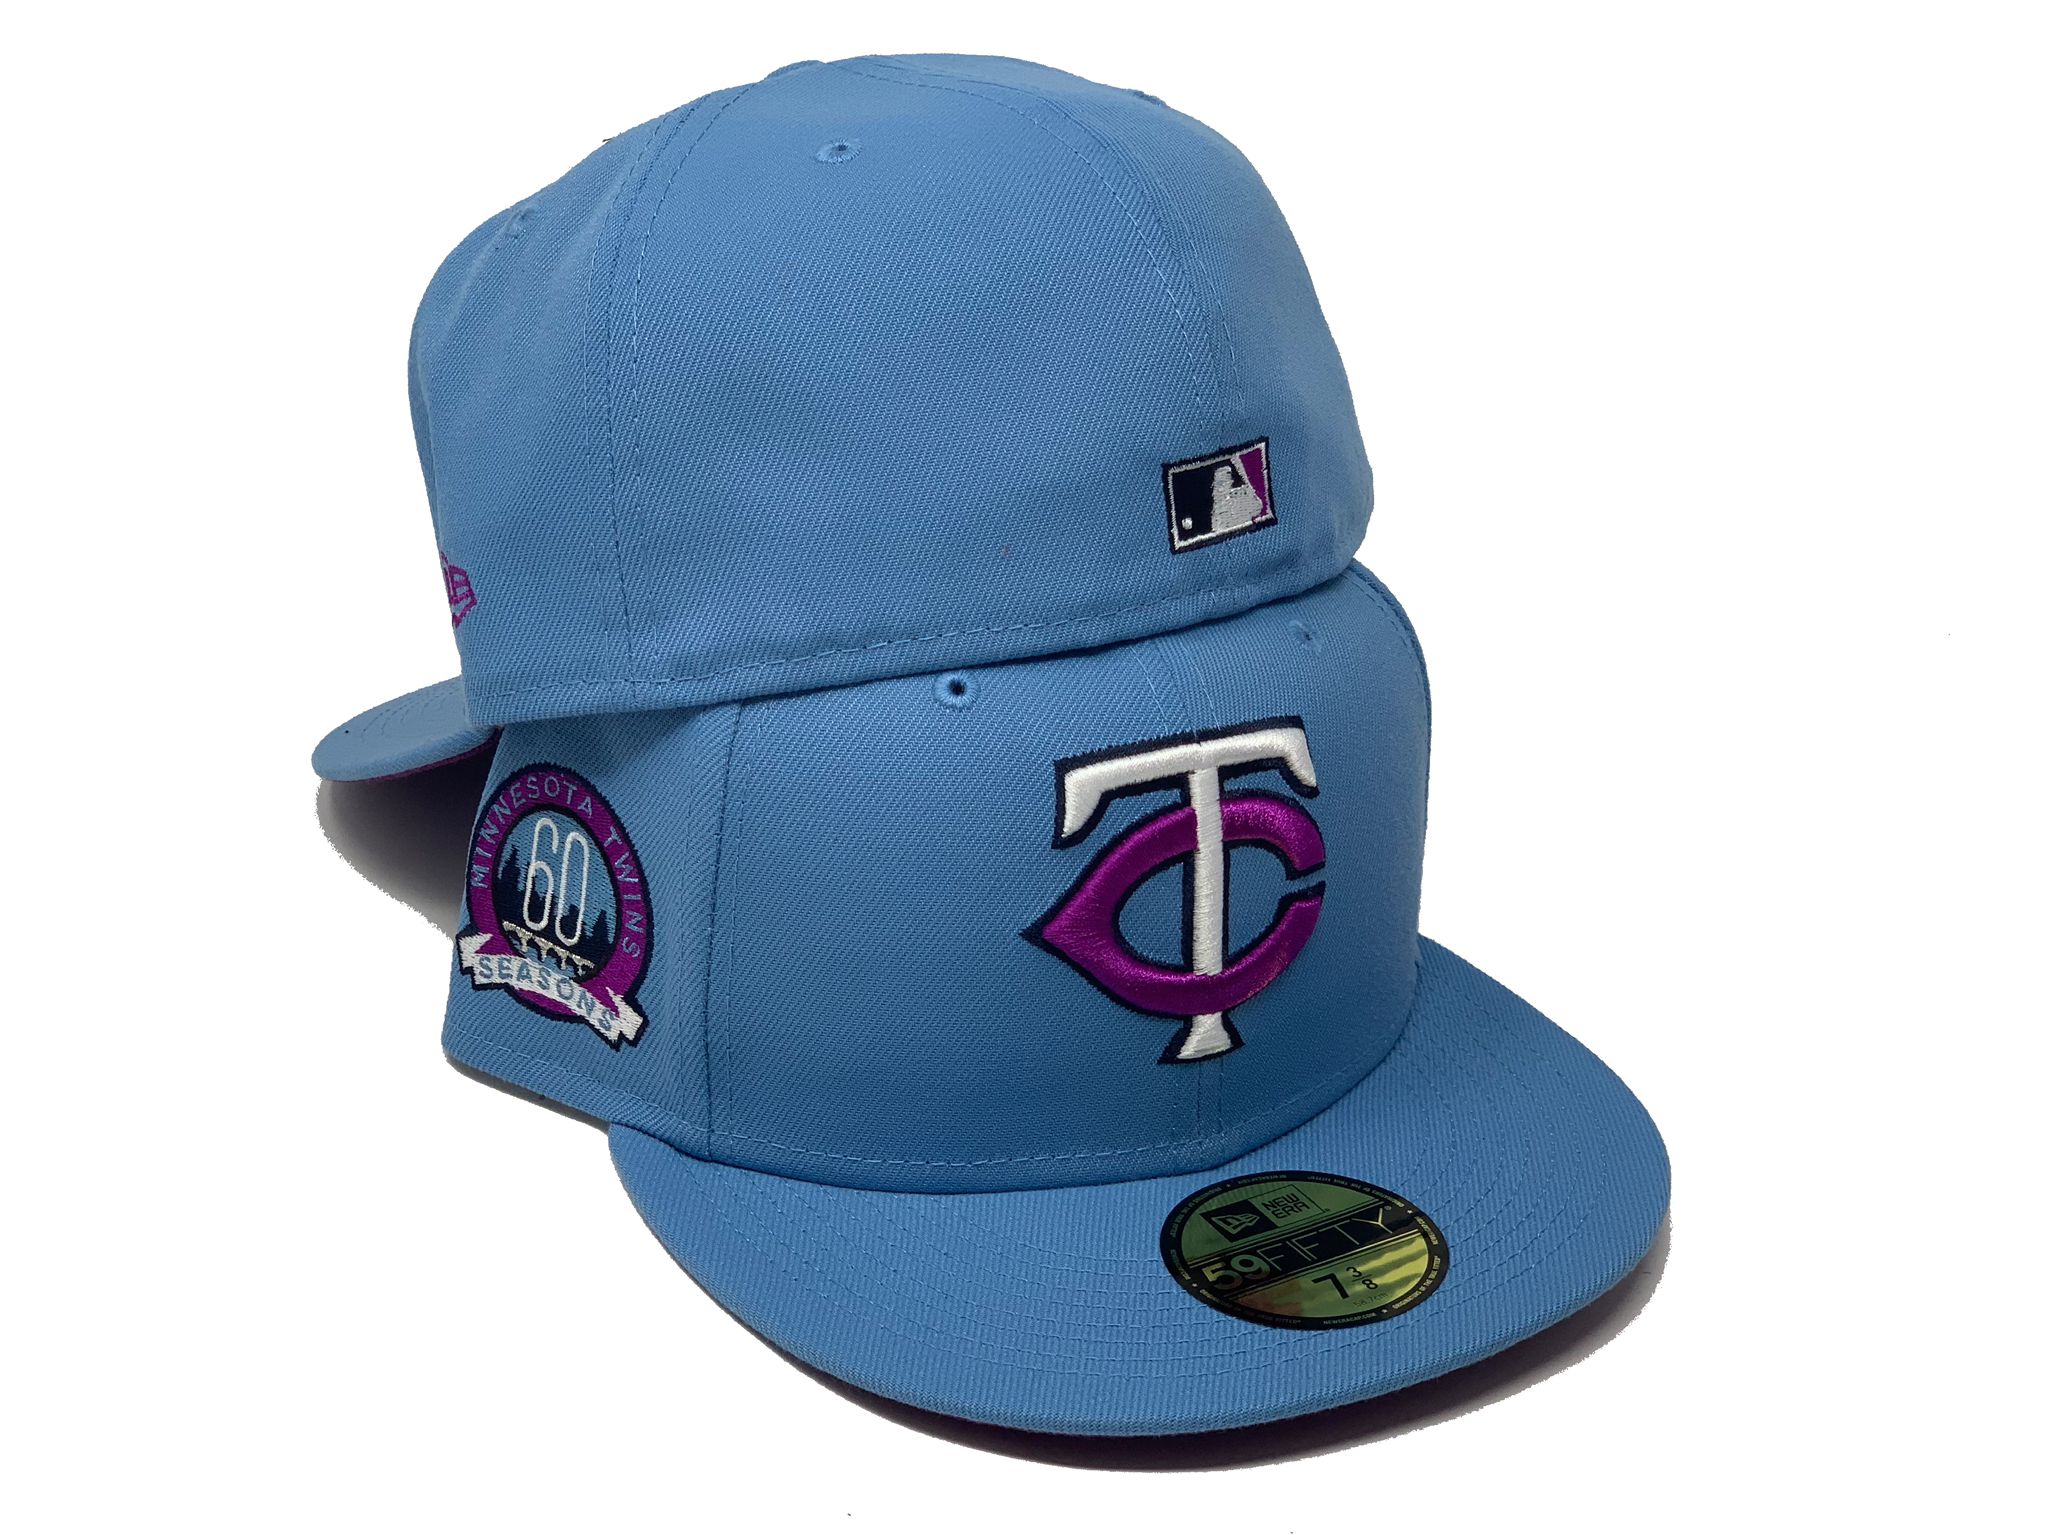  OC Sports Minnesota Twins MLB Retro Throwback Navy Blue Hat Cap  M Logo Adult Men's Adjustable : Sports & Outdoors